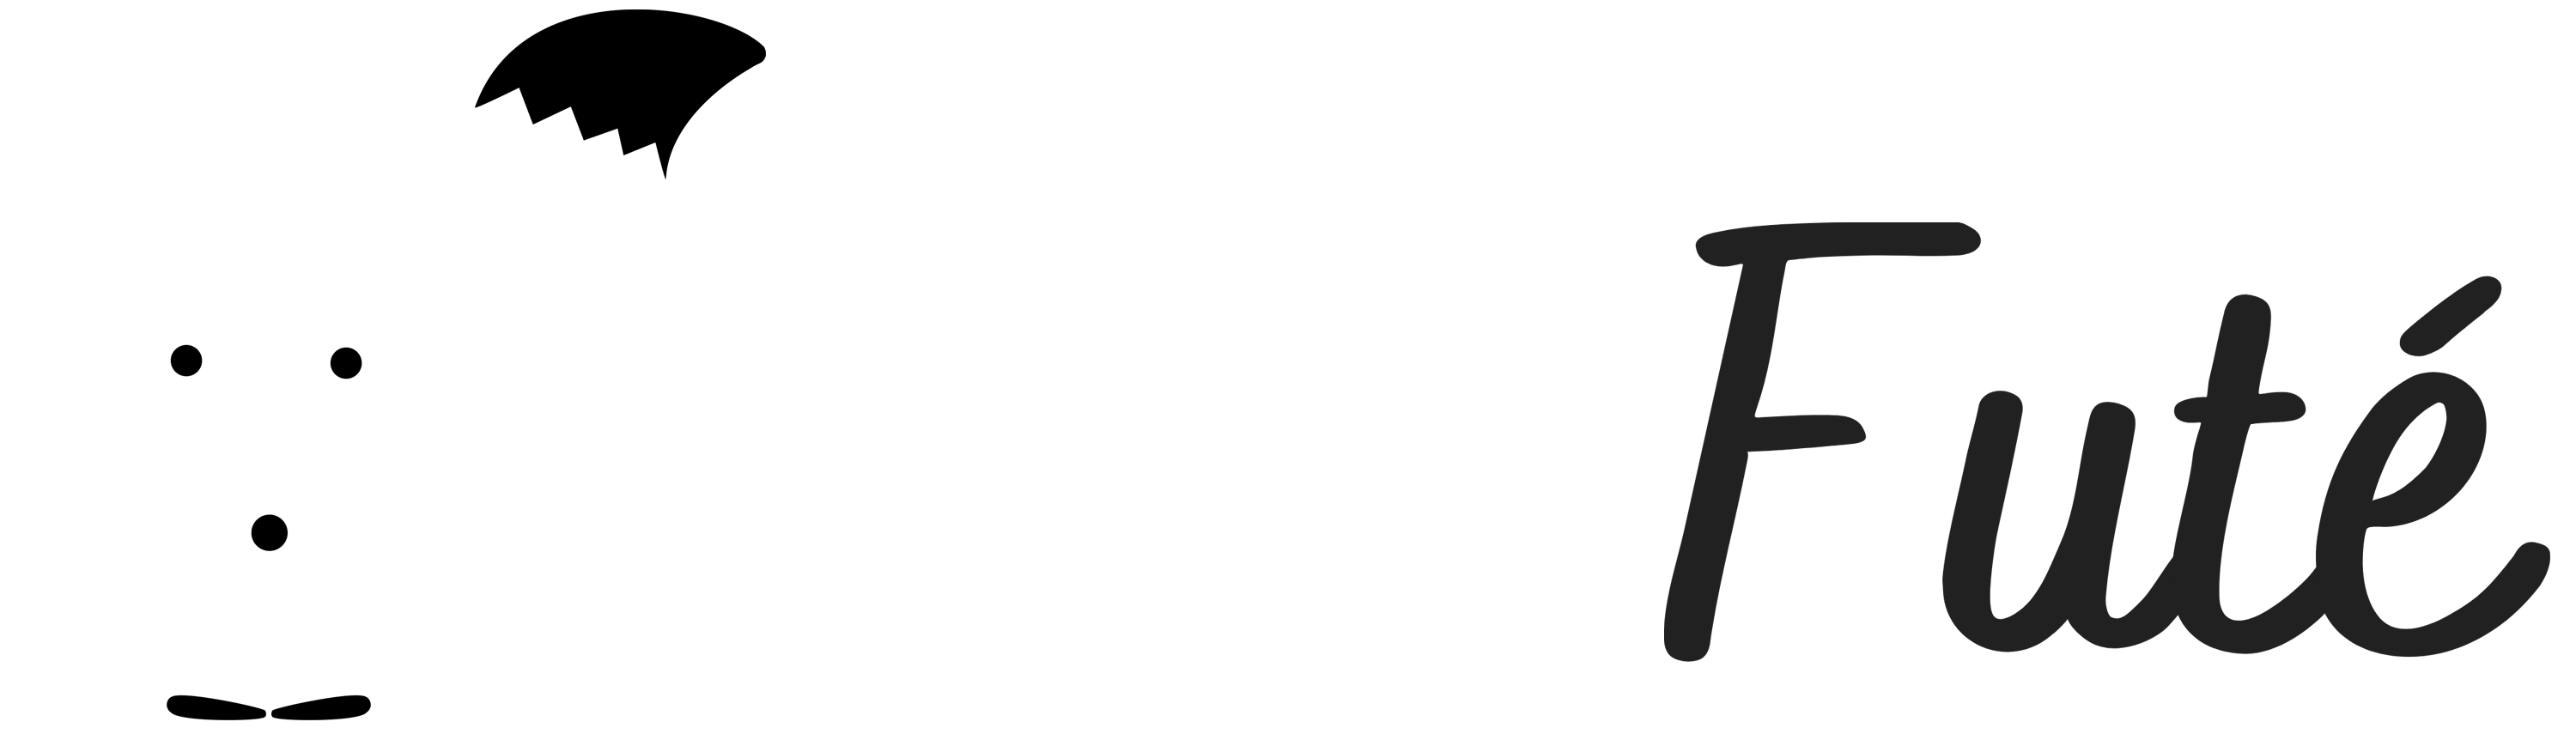 Super futé Logo